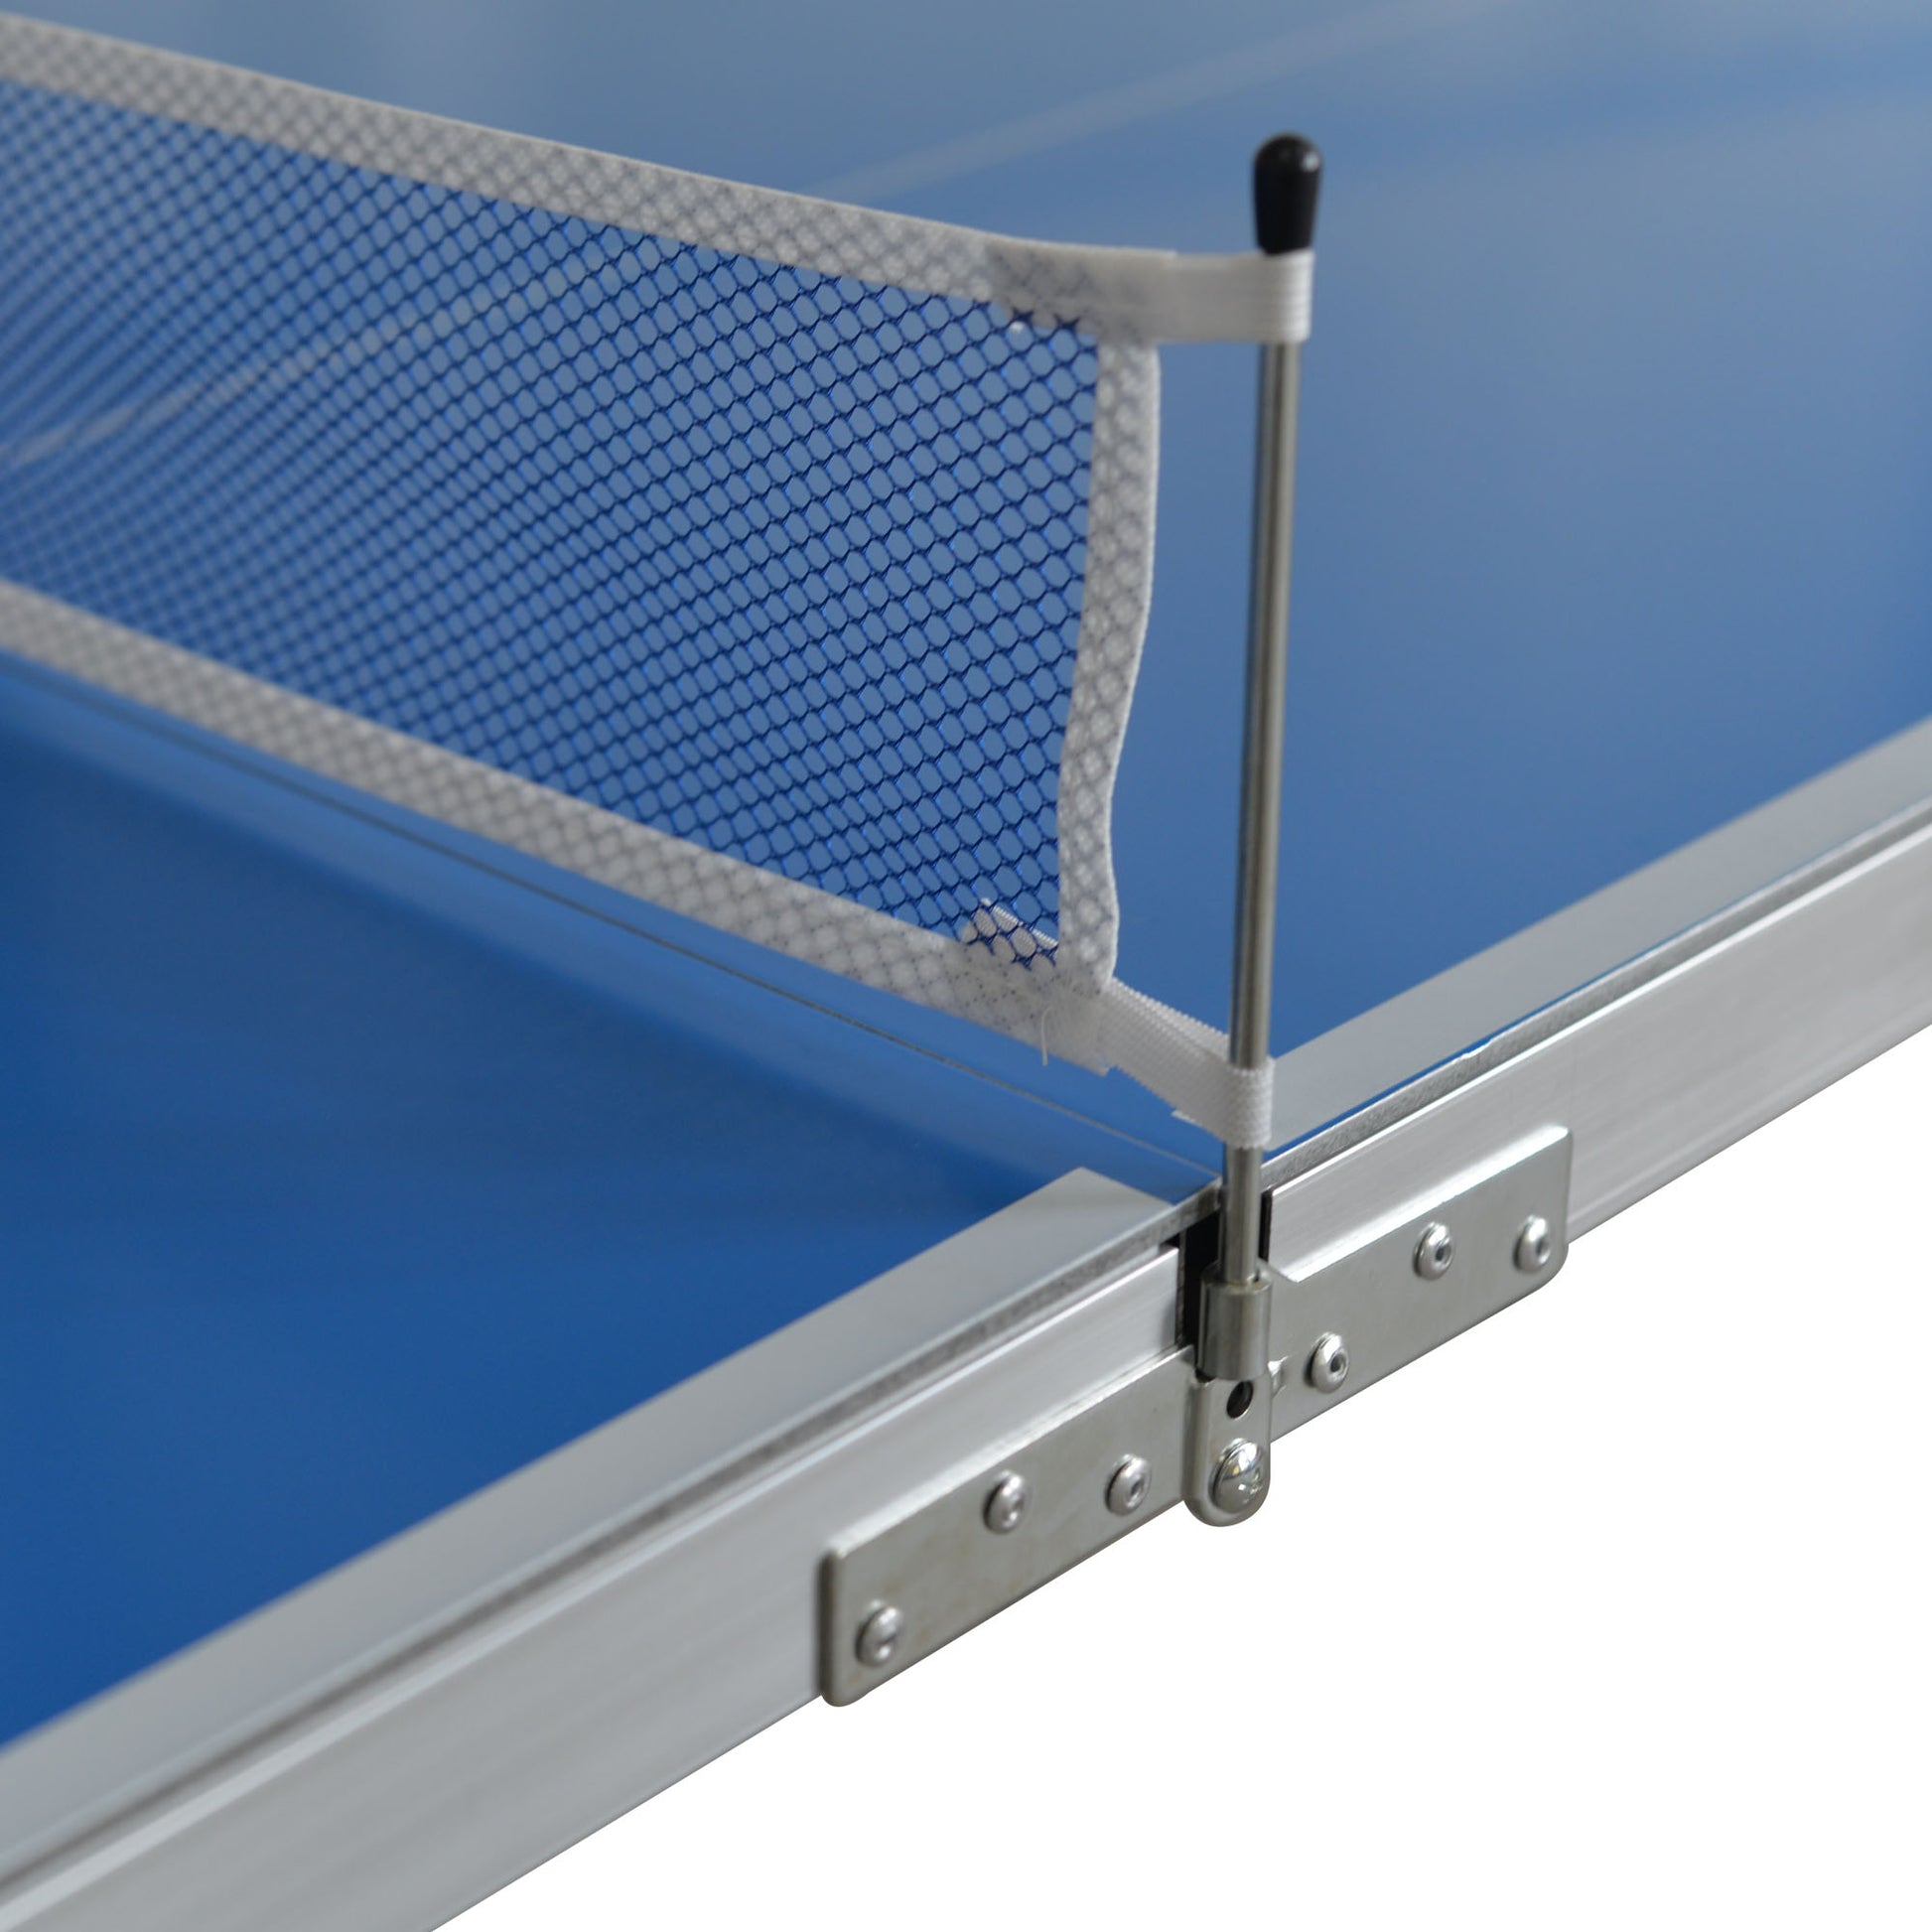 |Viavito PlayCase Table Tennis Table - Zoom|